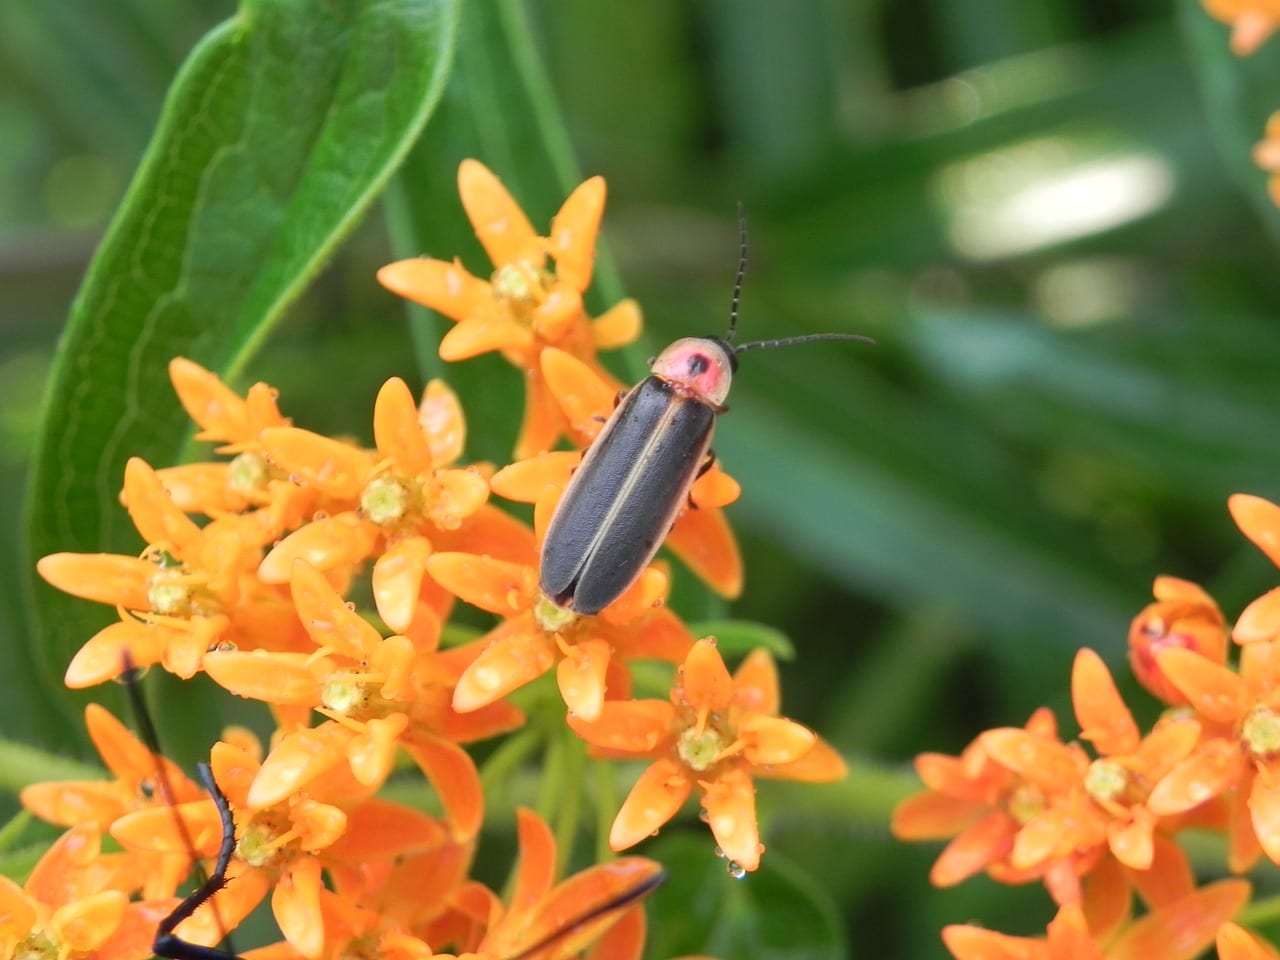 https://pixabay.com/en/firefly-lightning-bug-milkweed-2466543/